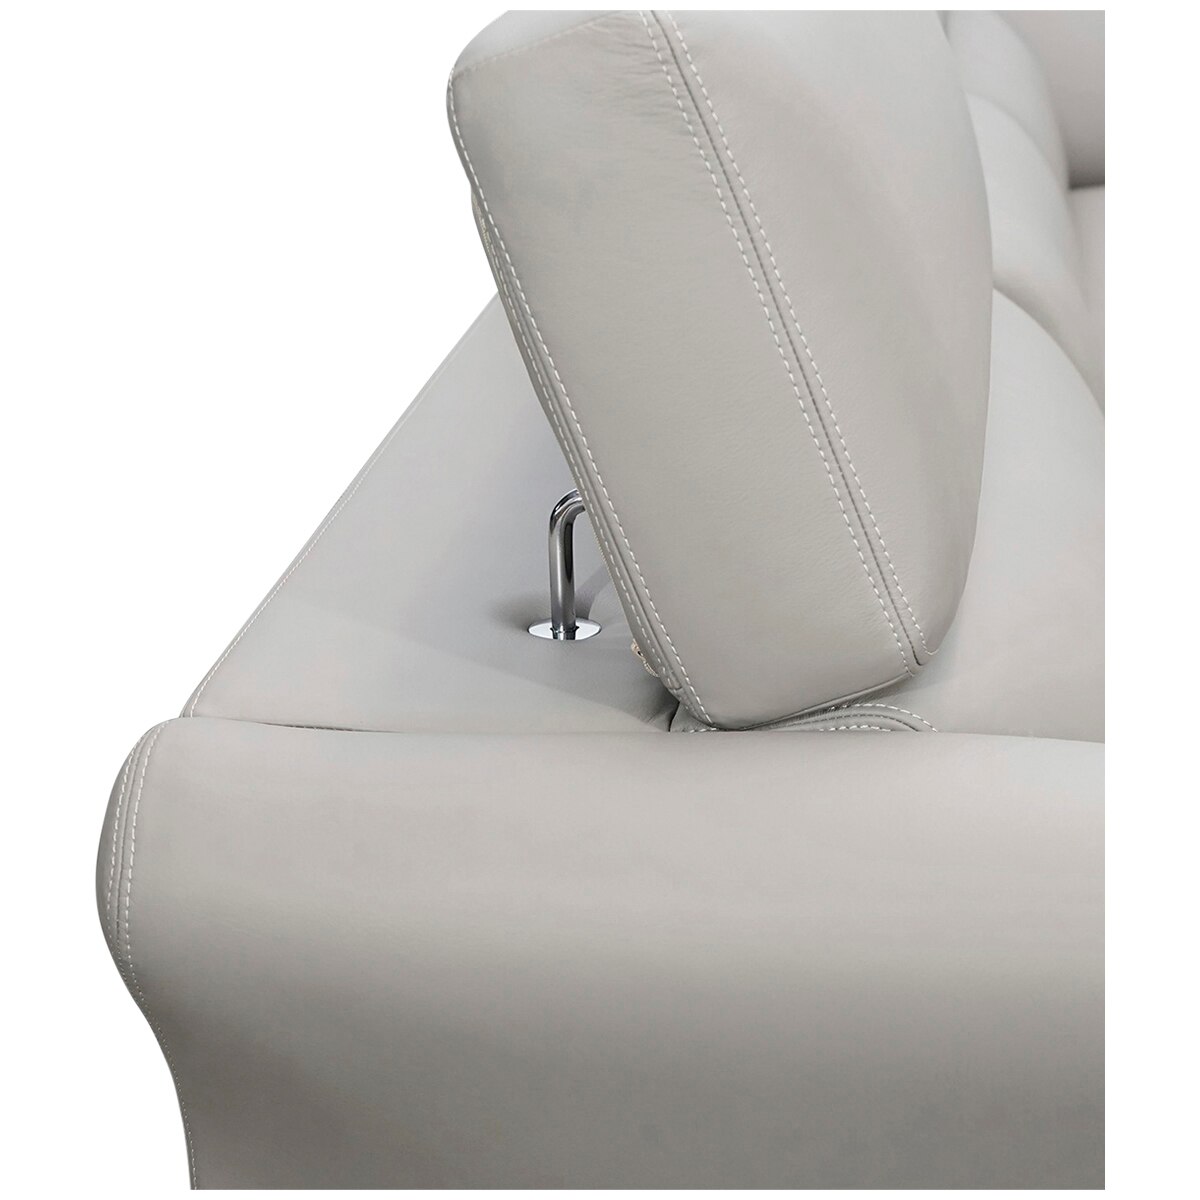 Moran Vancouver 3-Seater Leather Sofa